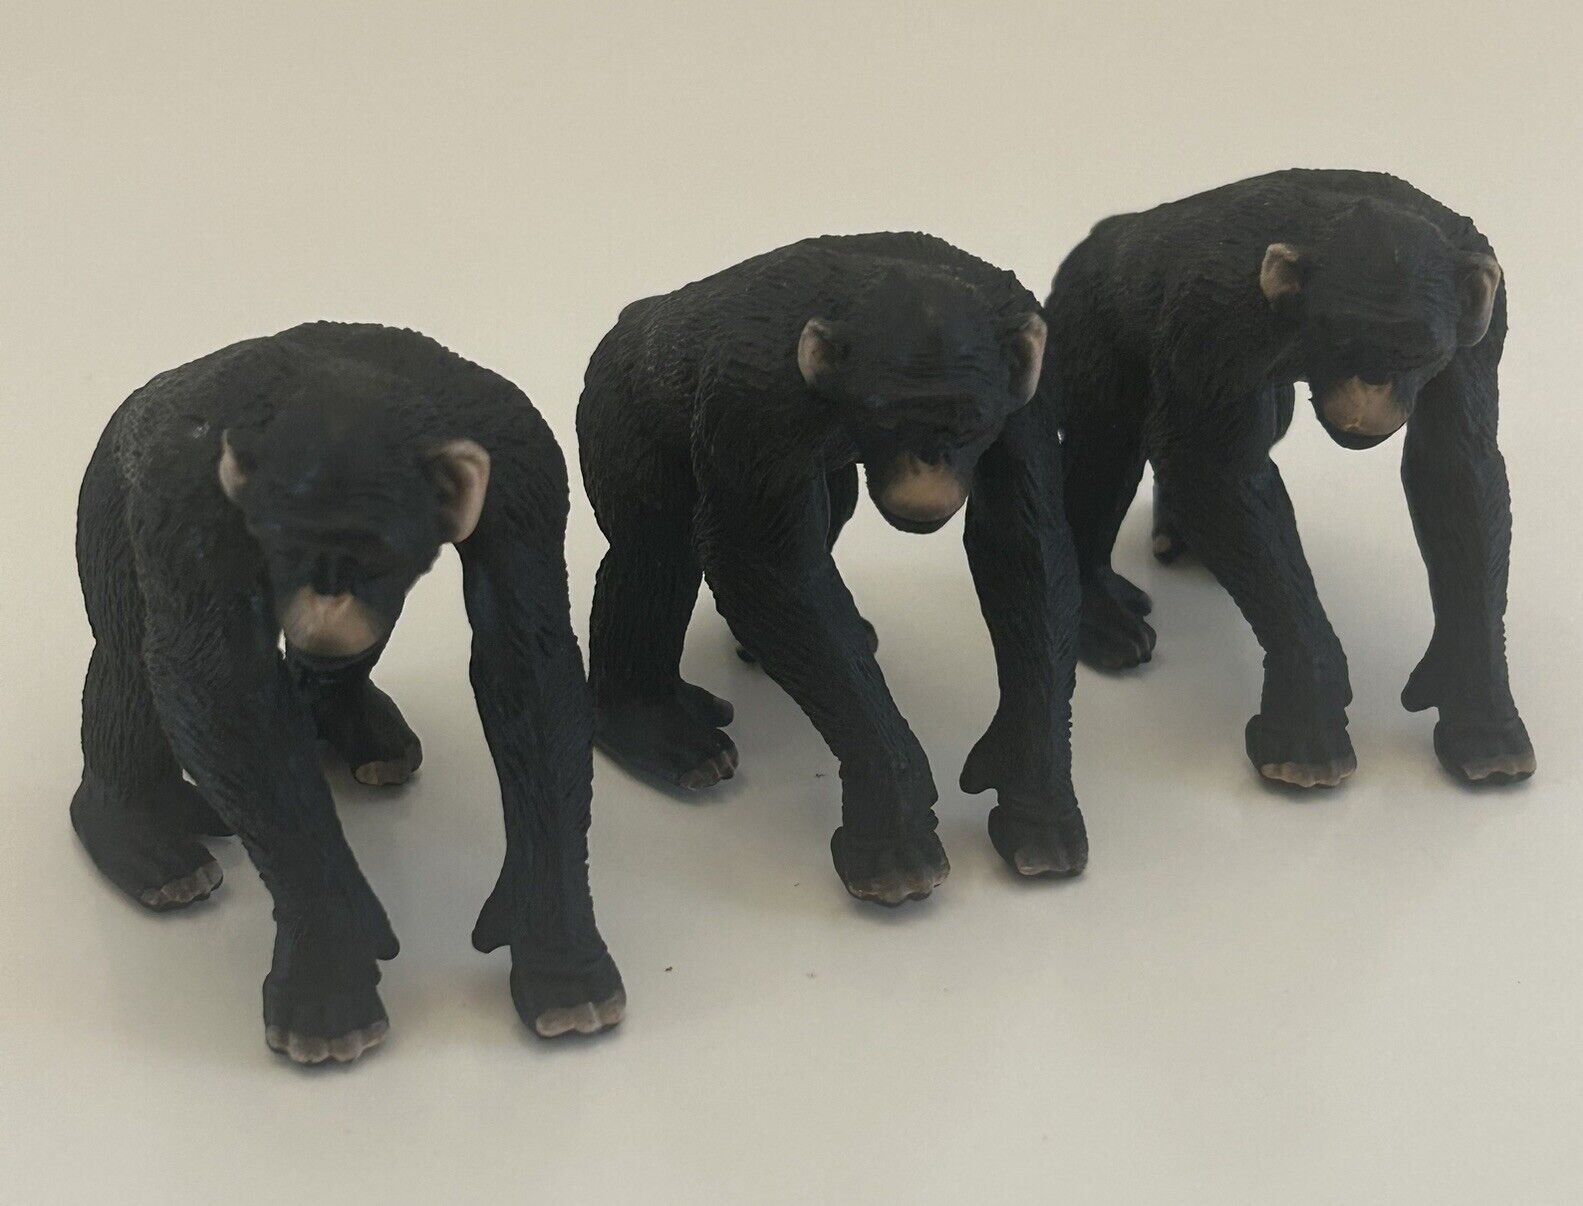 Schleich Chimpanzee Wildlife Monkey Animal Figure Retired Toy D-73527 (Lot of 3)